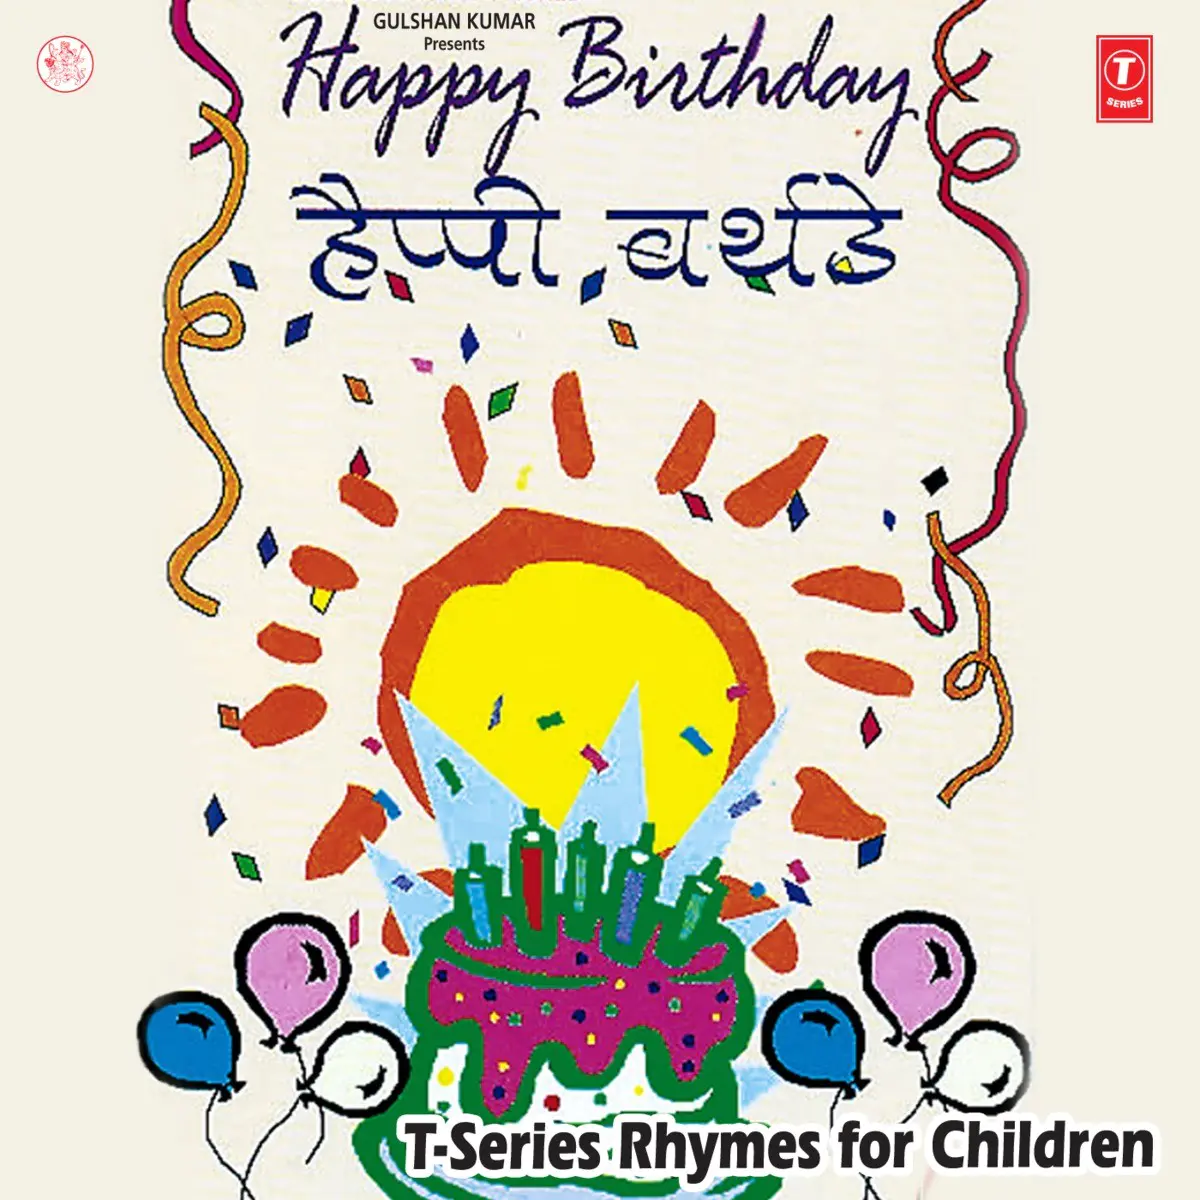 Happy Birthday Songs Songs Download Happy Birthday Songs Mp3 Songs Online Free On Gaana Com